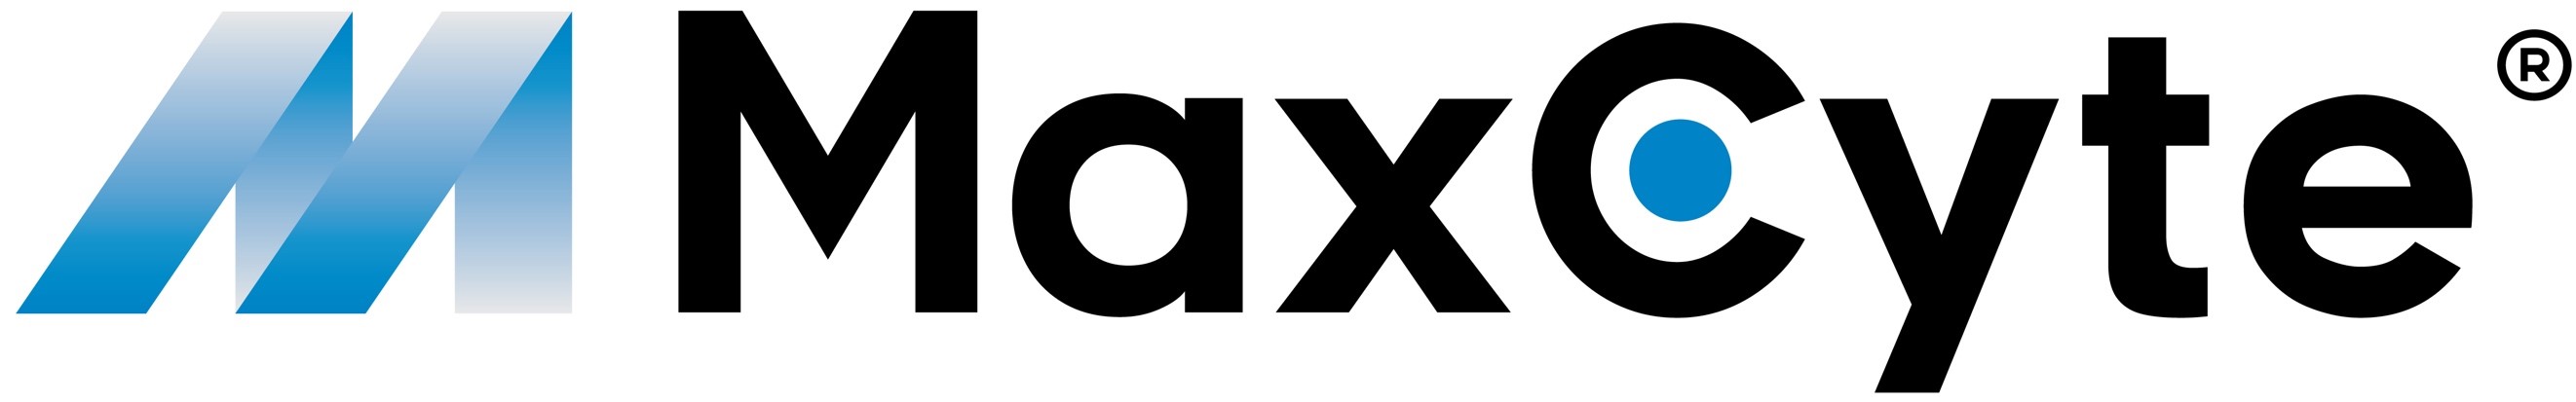 maxcyte logo new.jpg